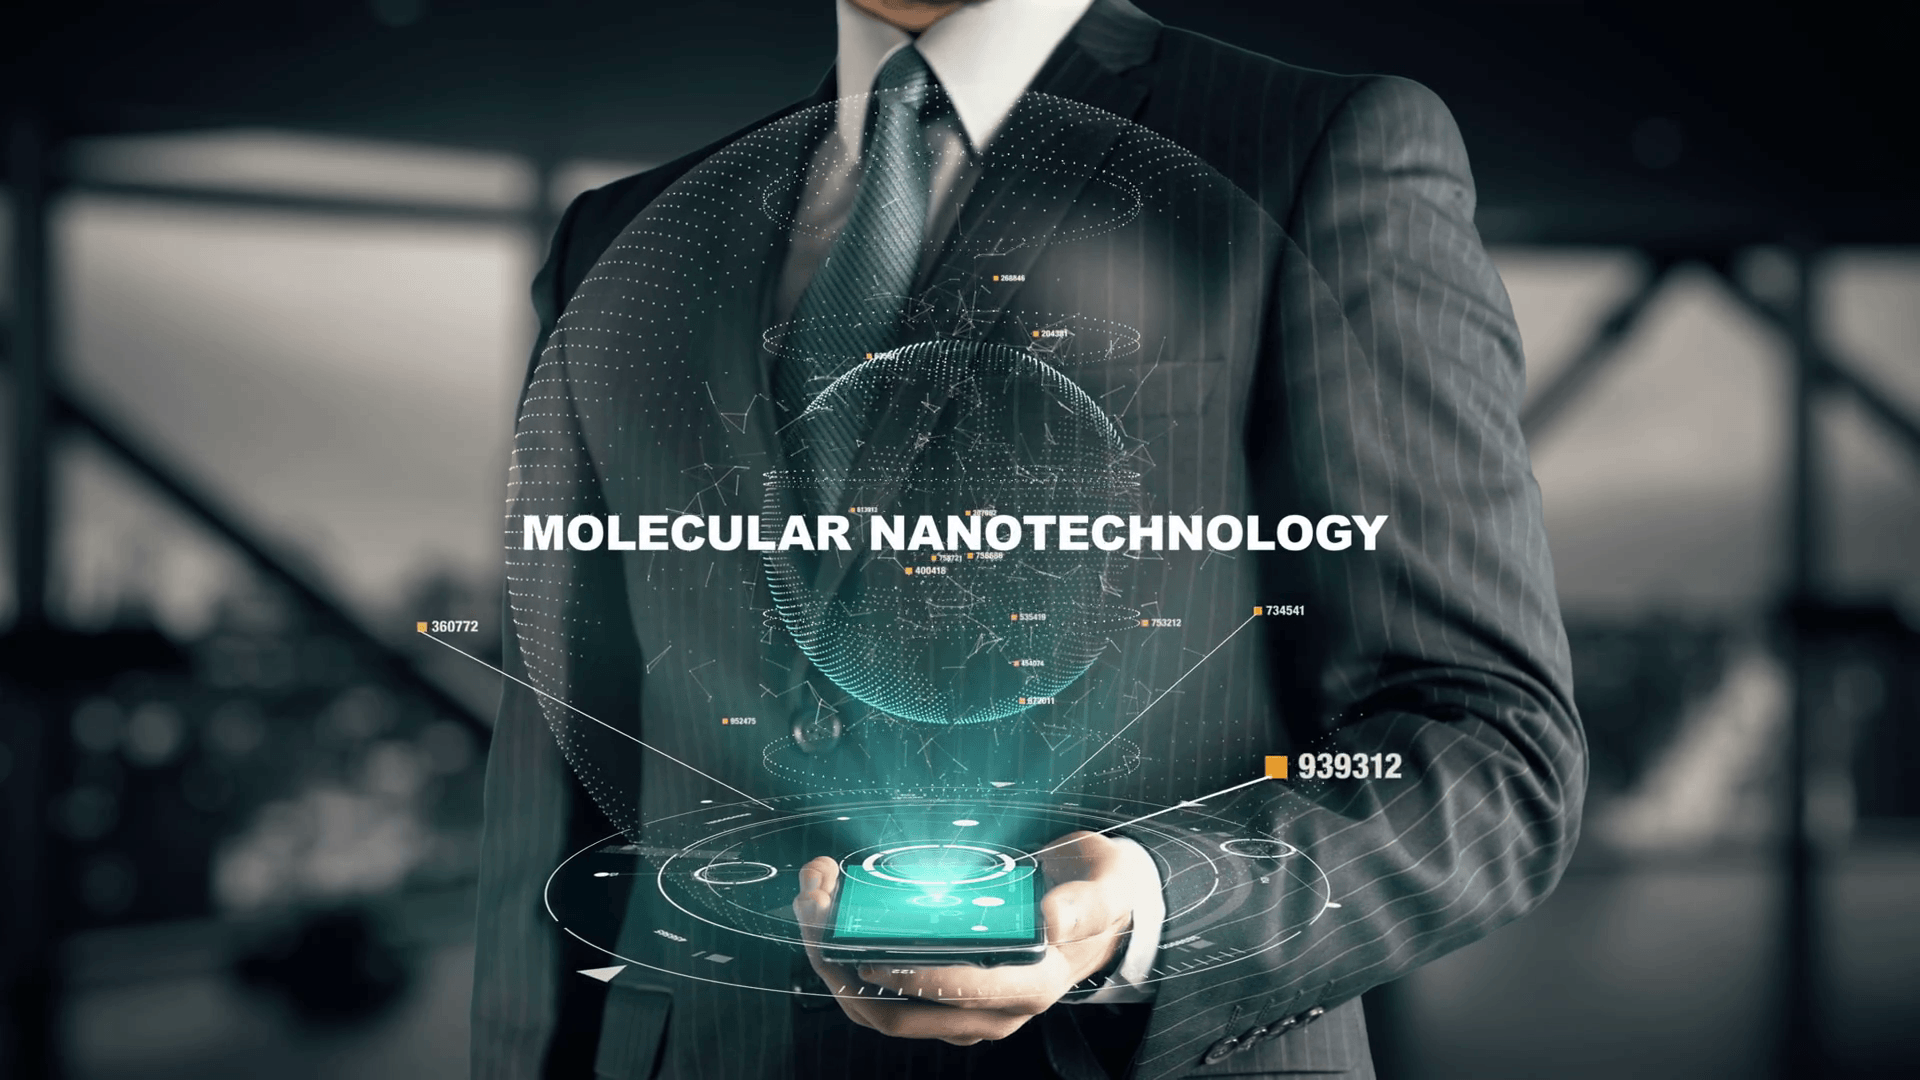 Molecular Nanotechnology with hologram businessman concept Stock